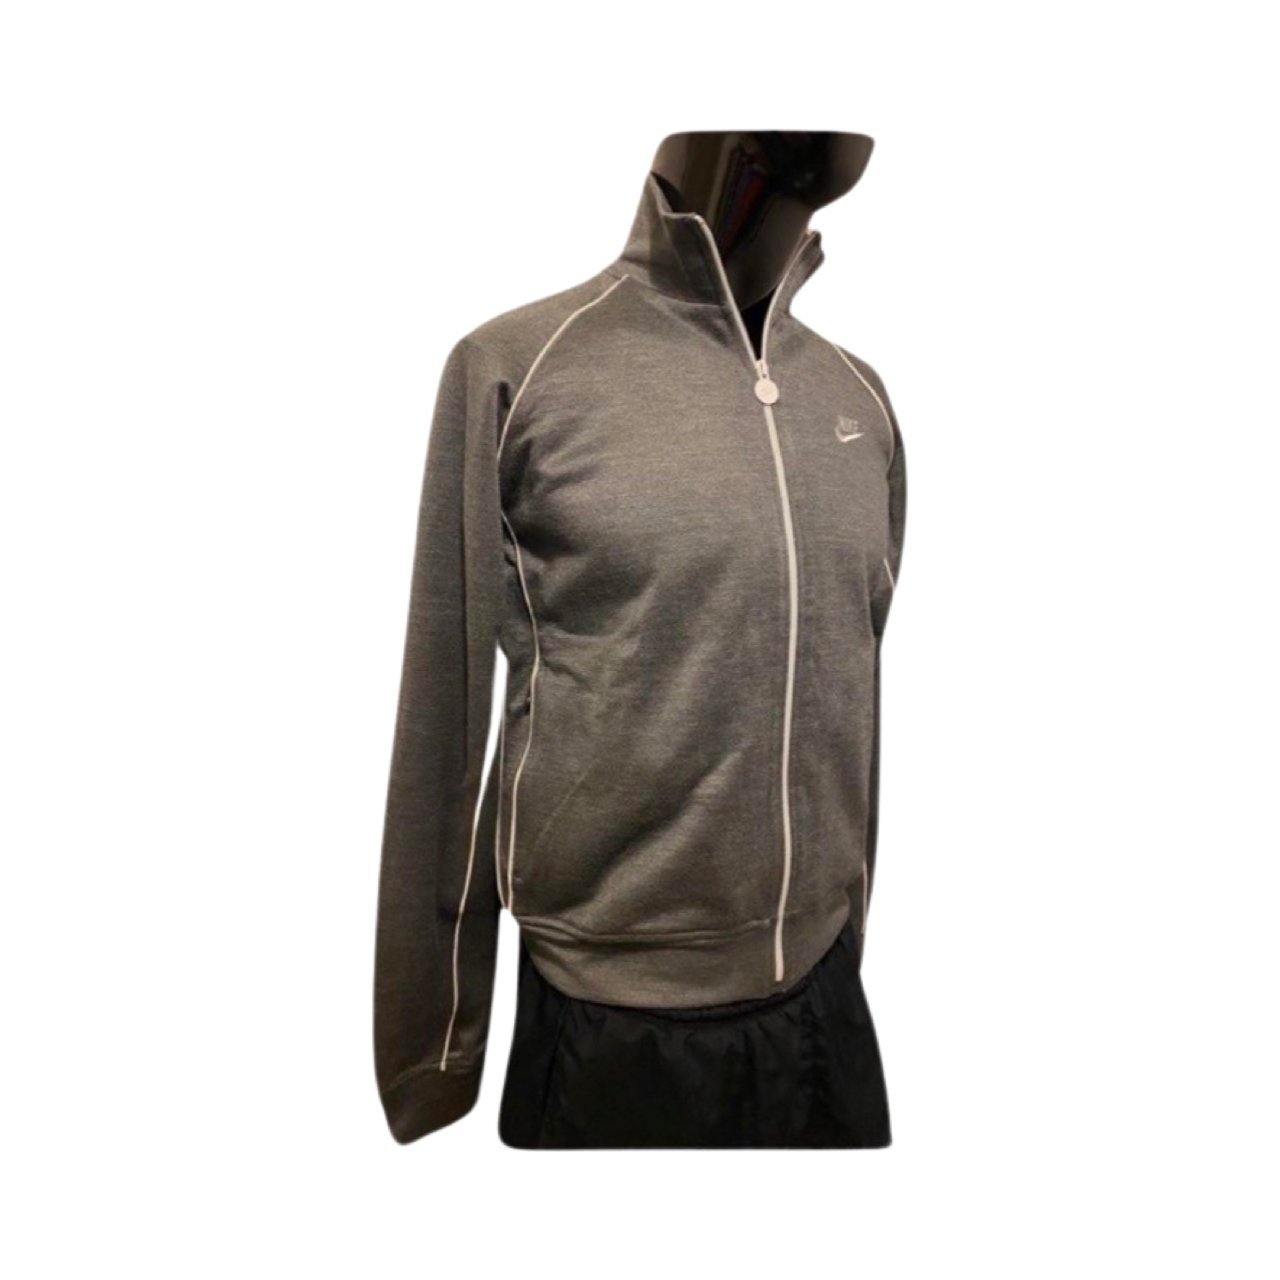 Nike Swoosh Retro Grey Full Zip Lightweight Jacket for Men - Soul and Sense Streetwear